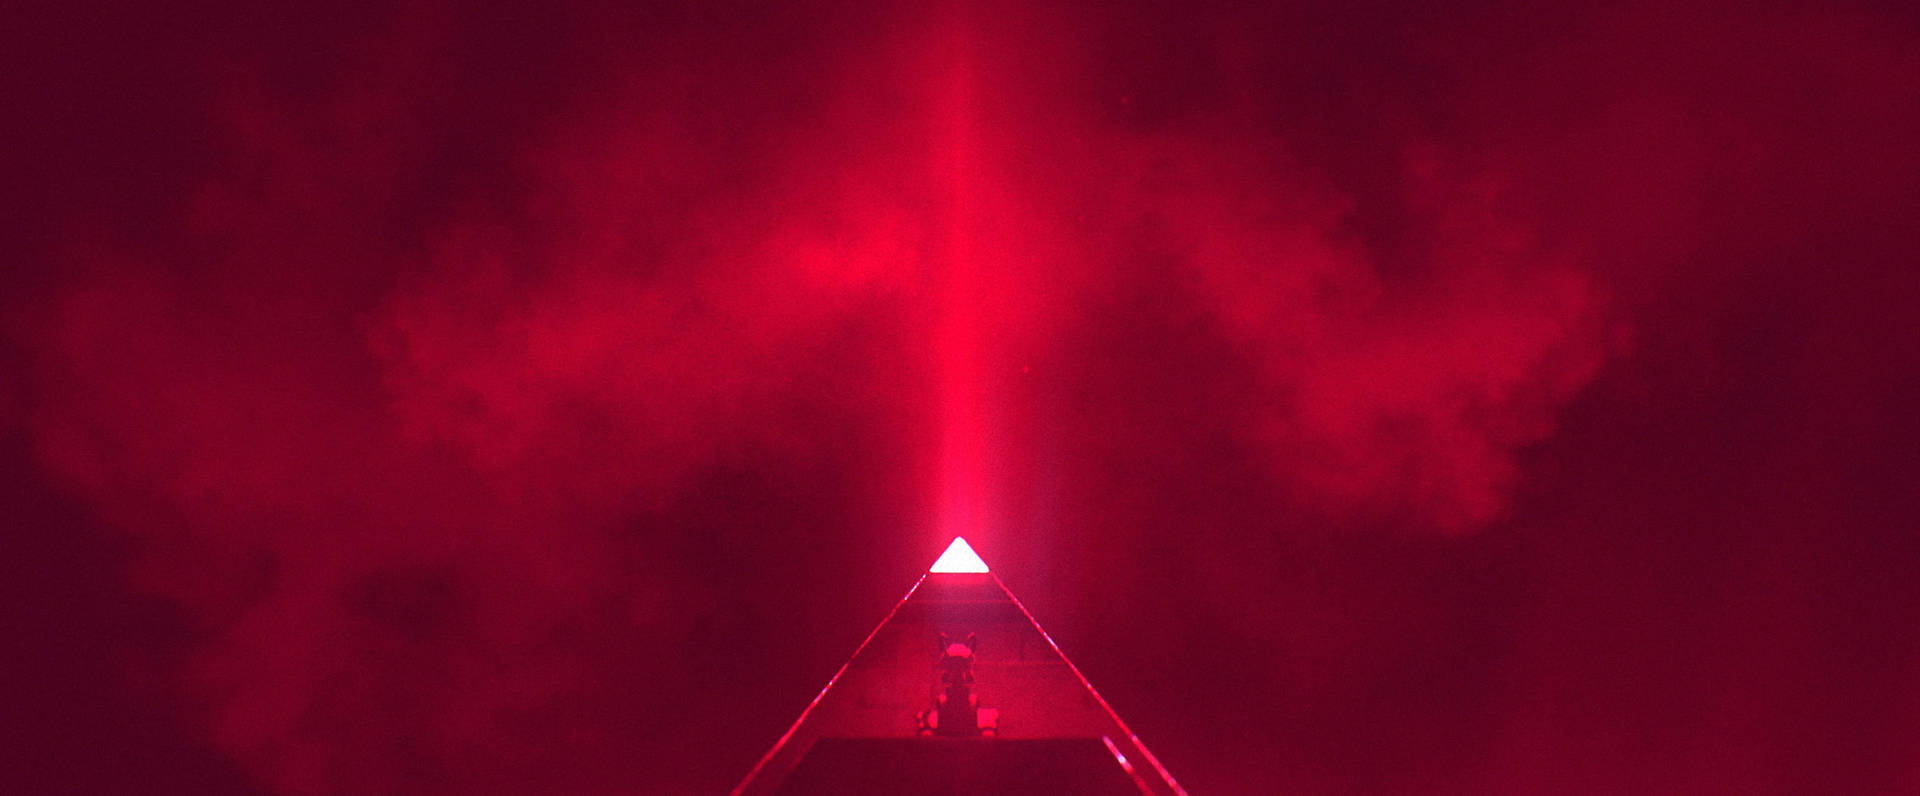 American Gods Red Pyramid